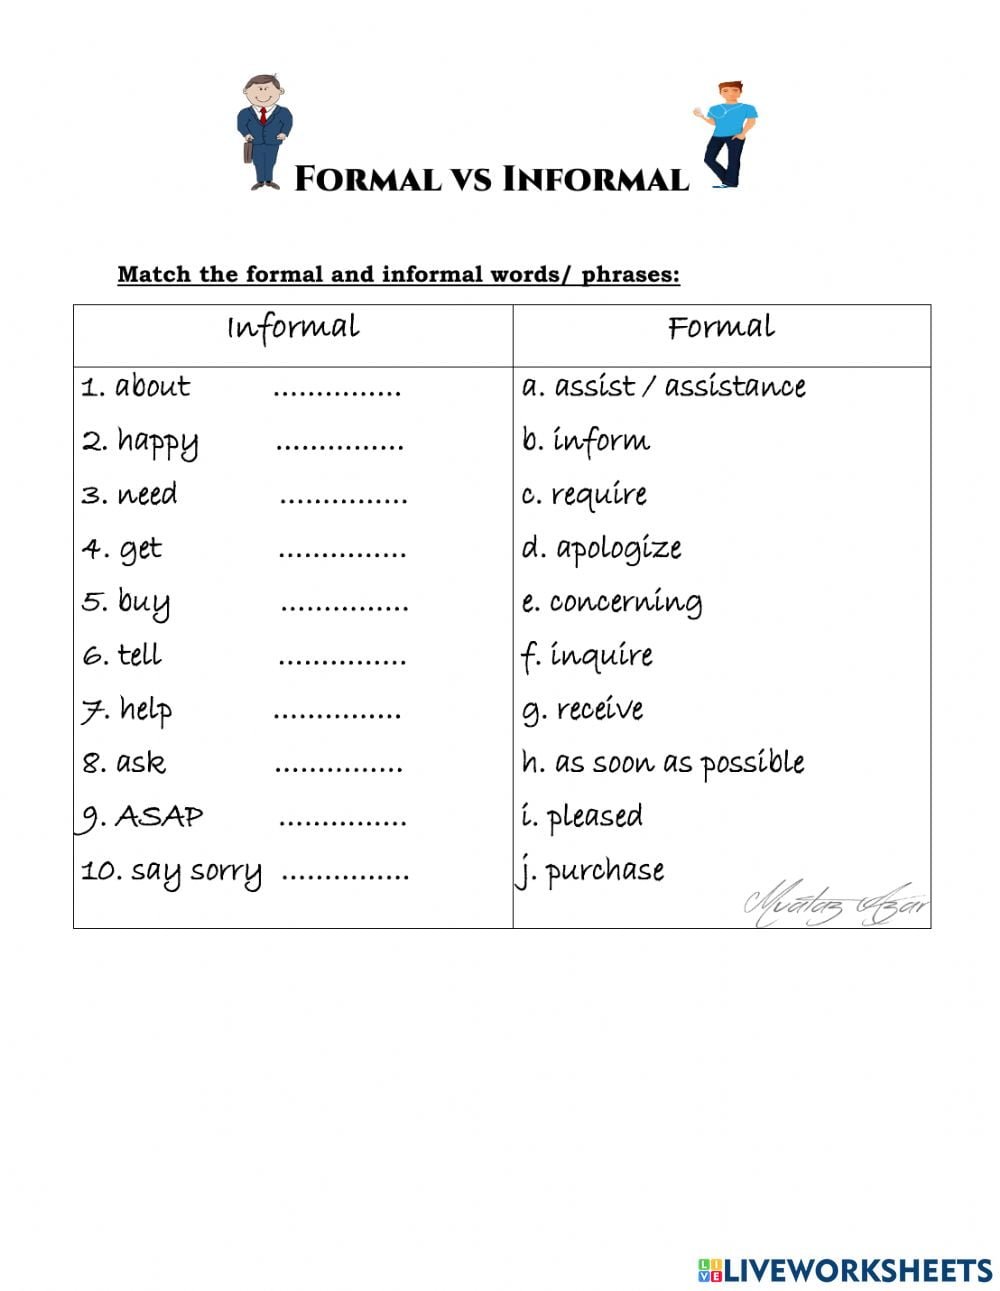 formal-vs-informal-worksheets-worksheetscity